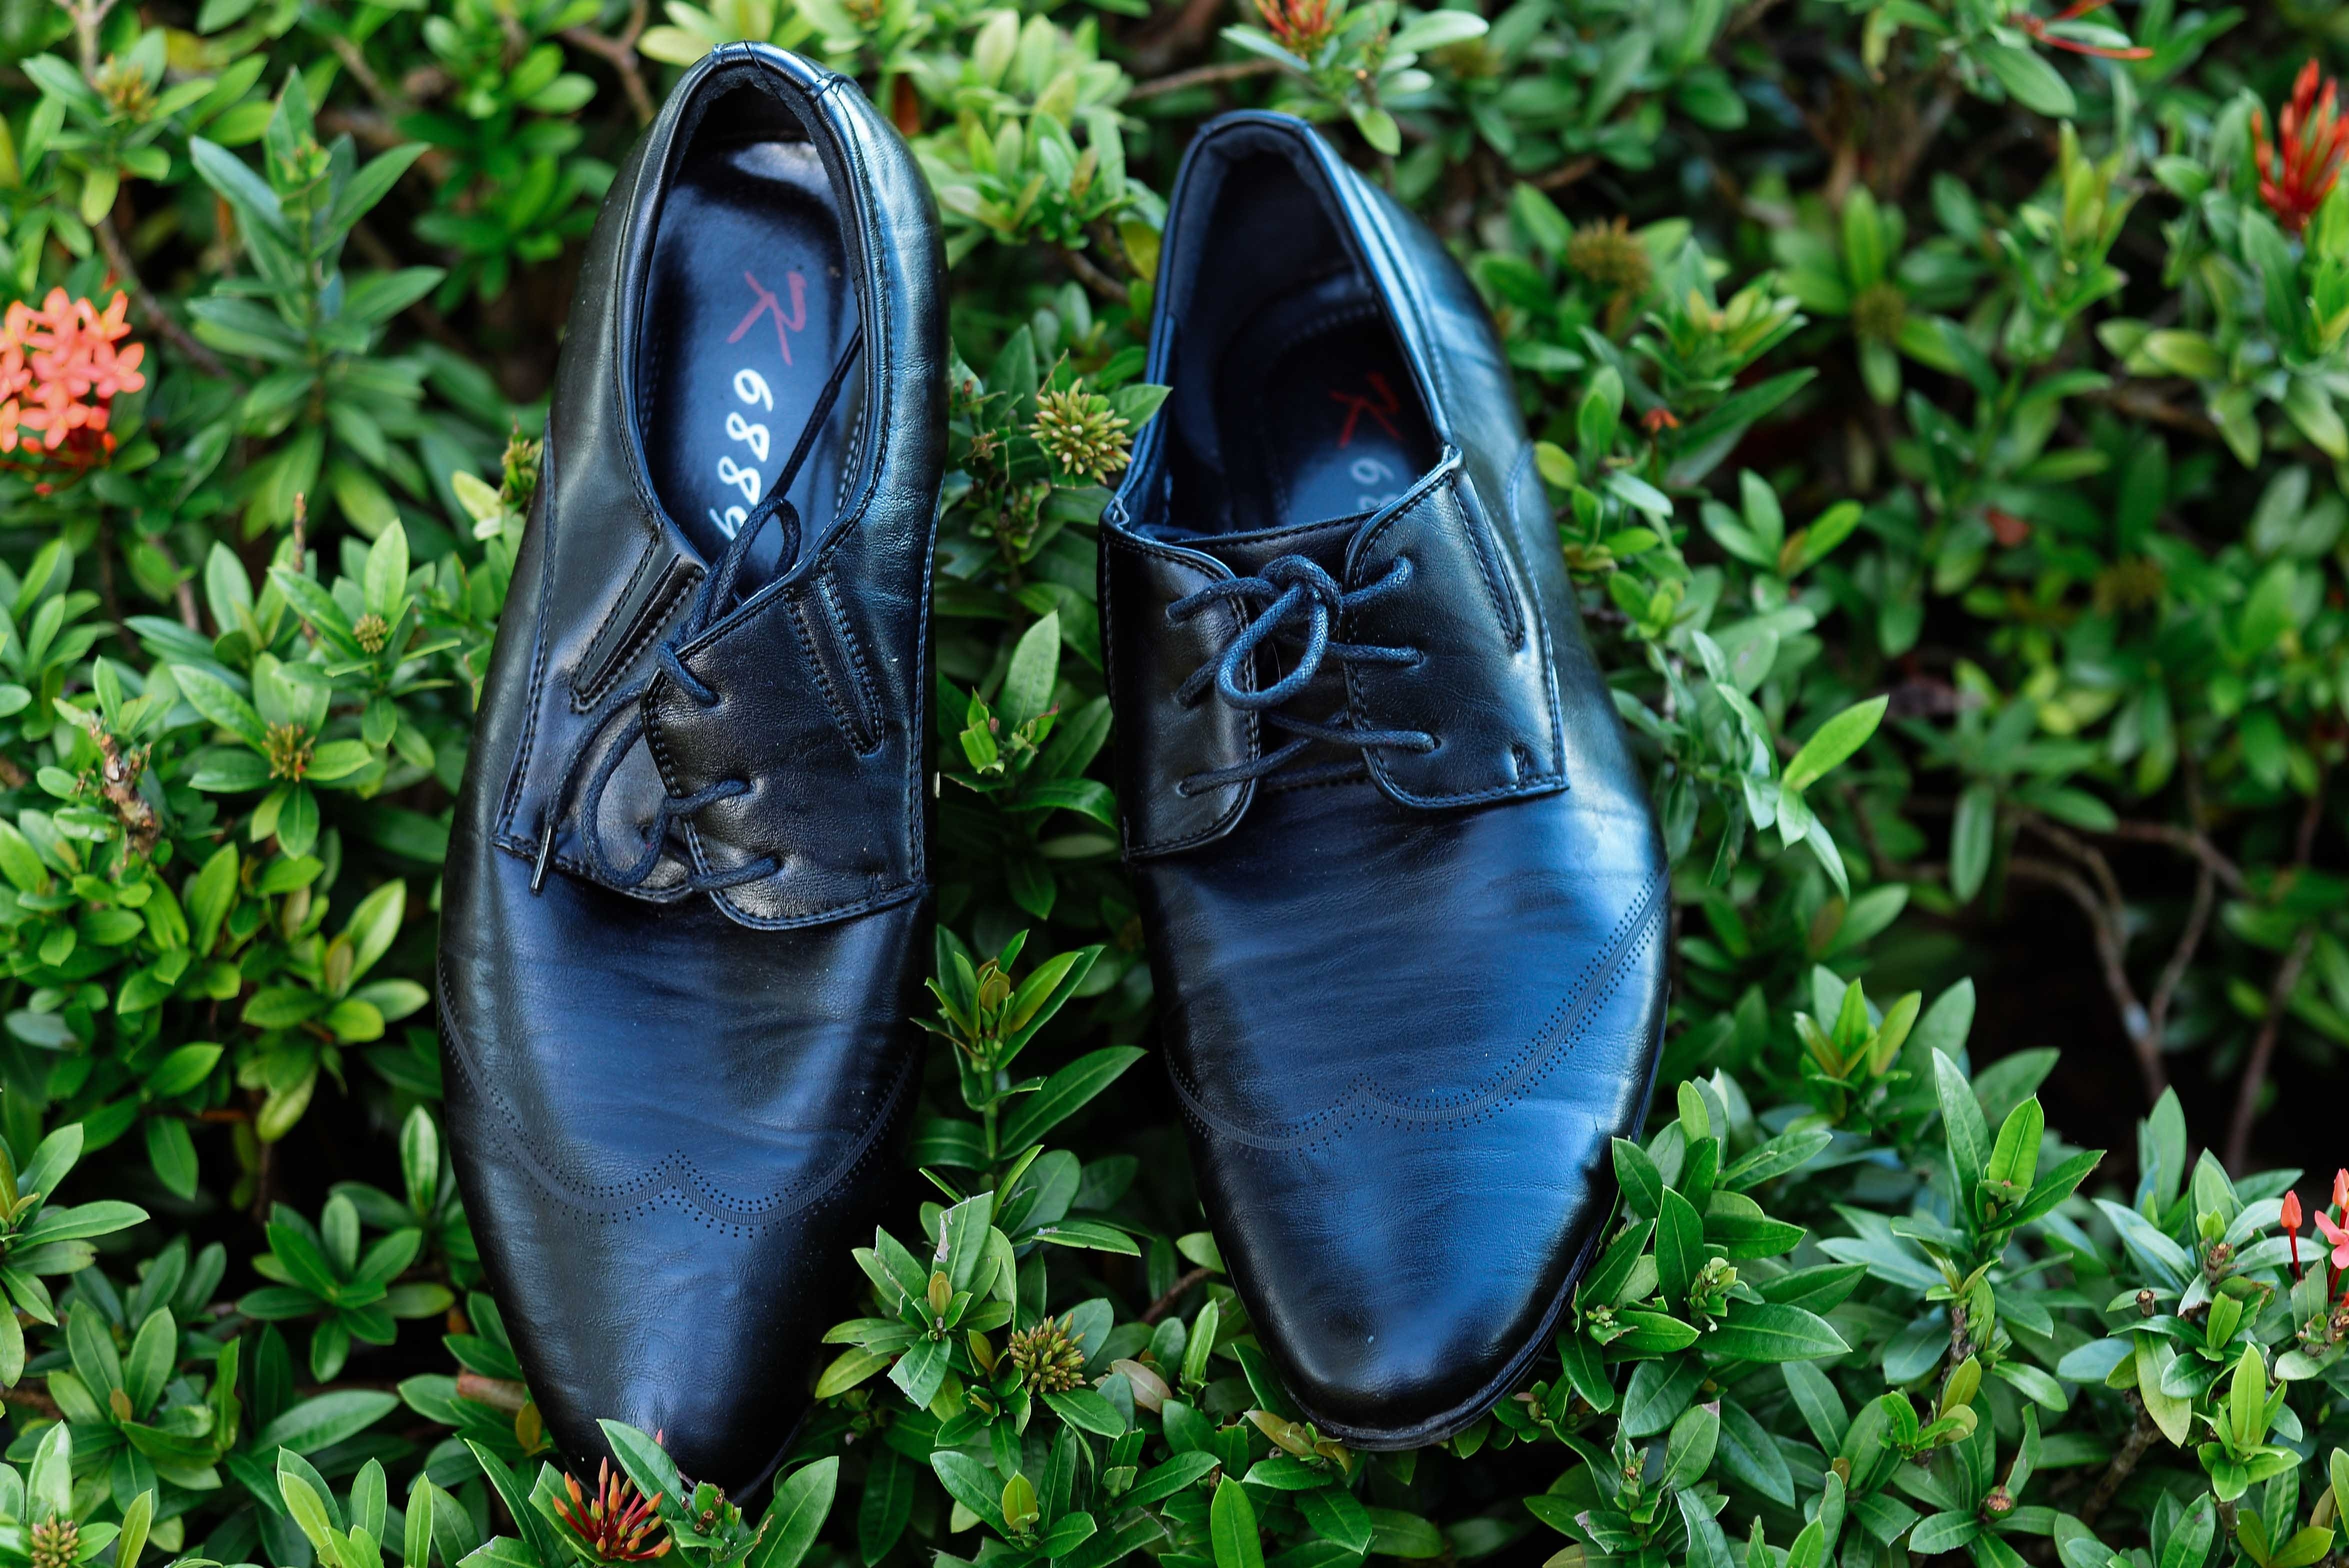 black leather dress shoes